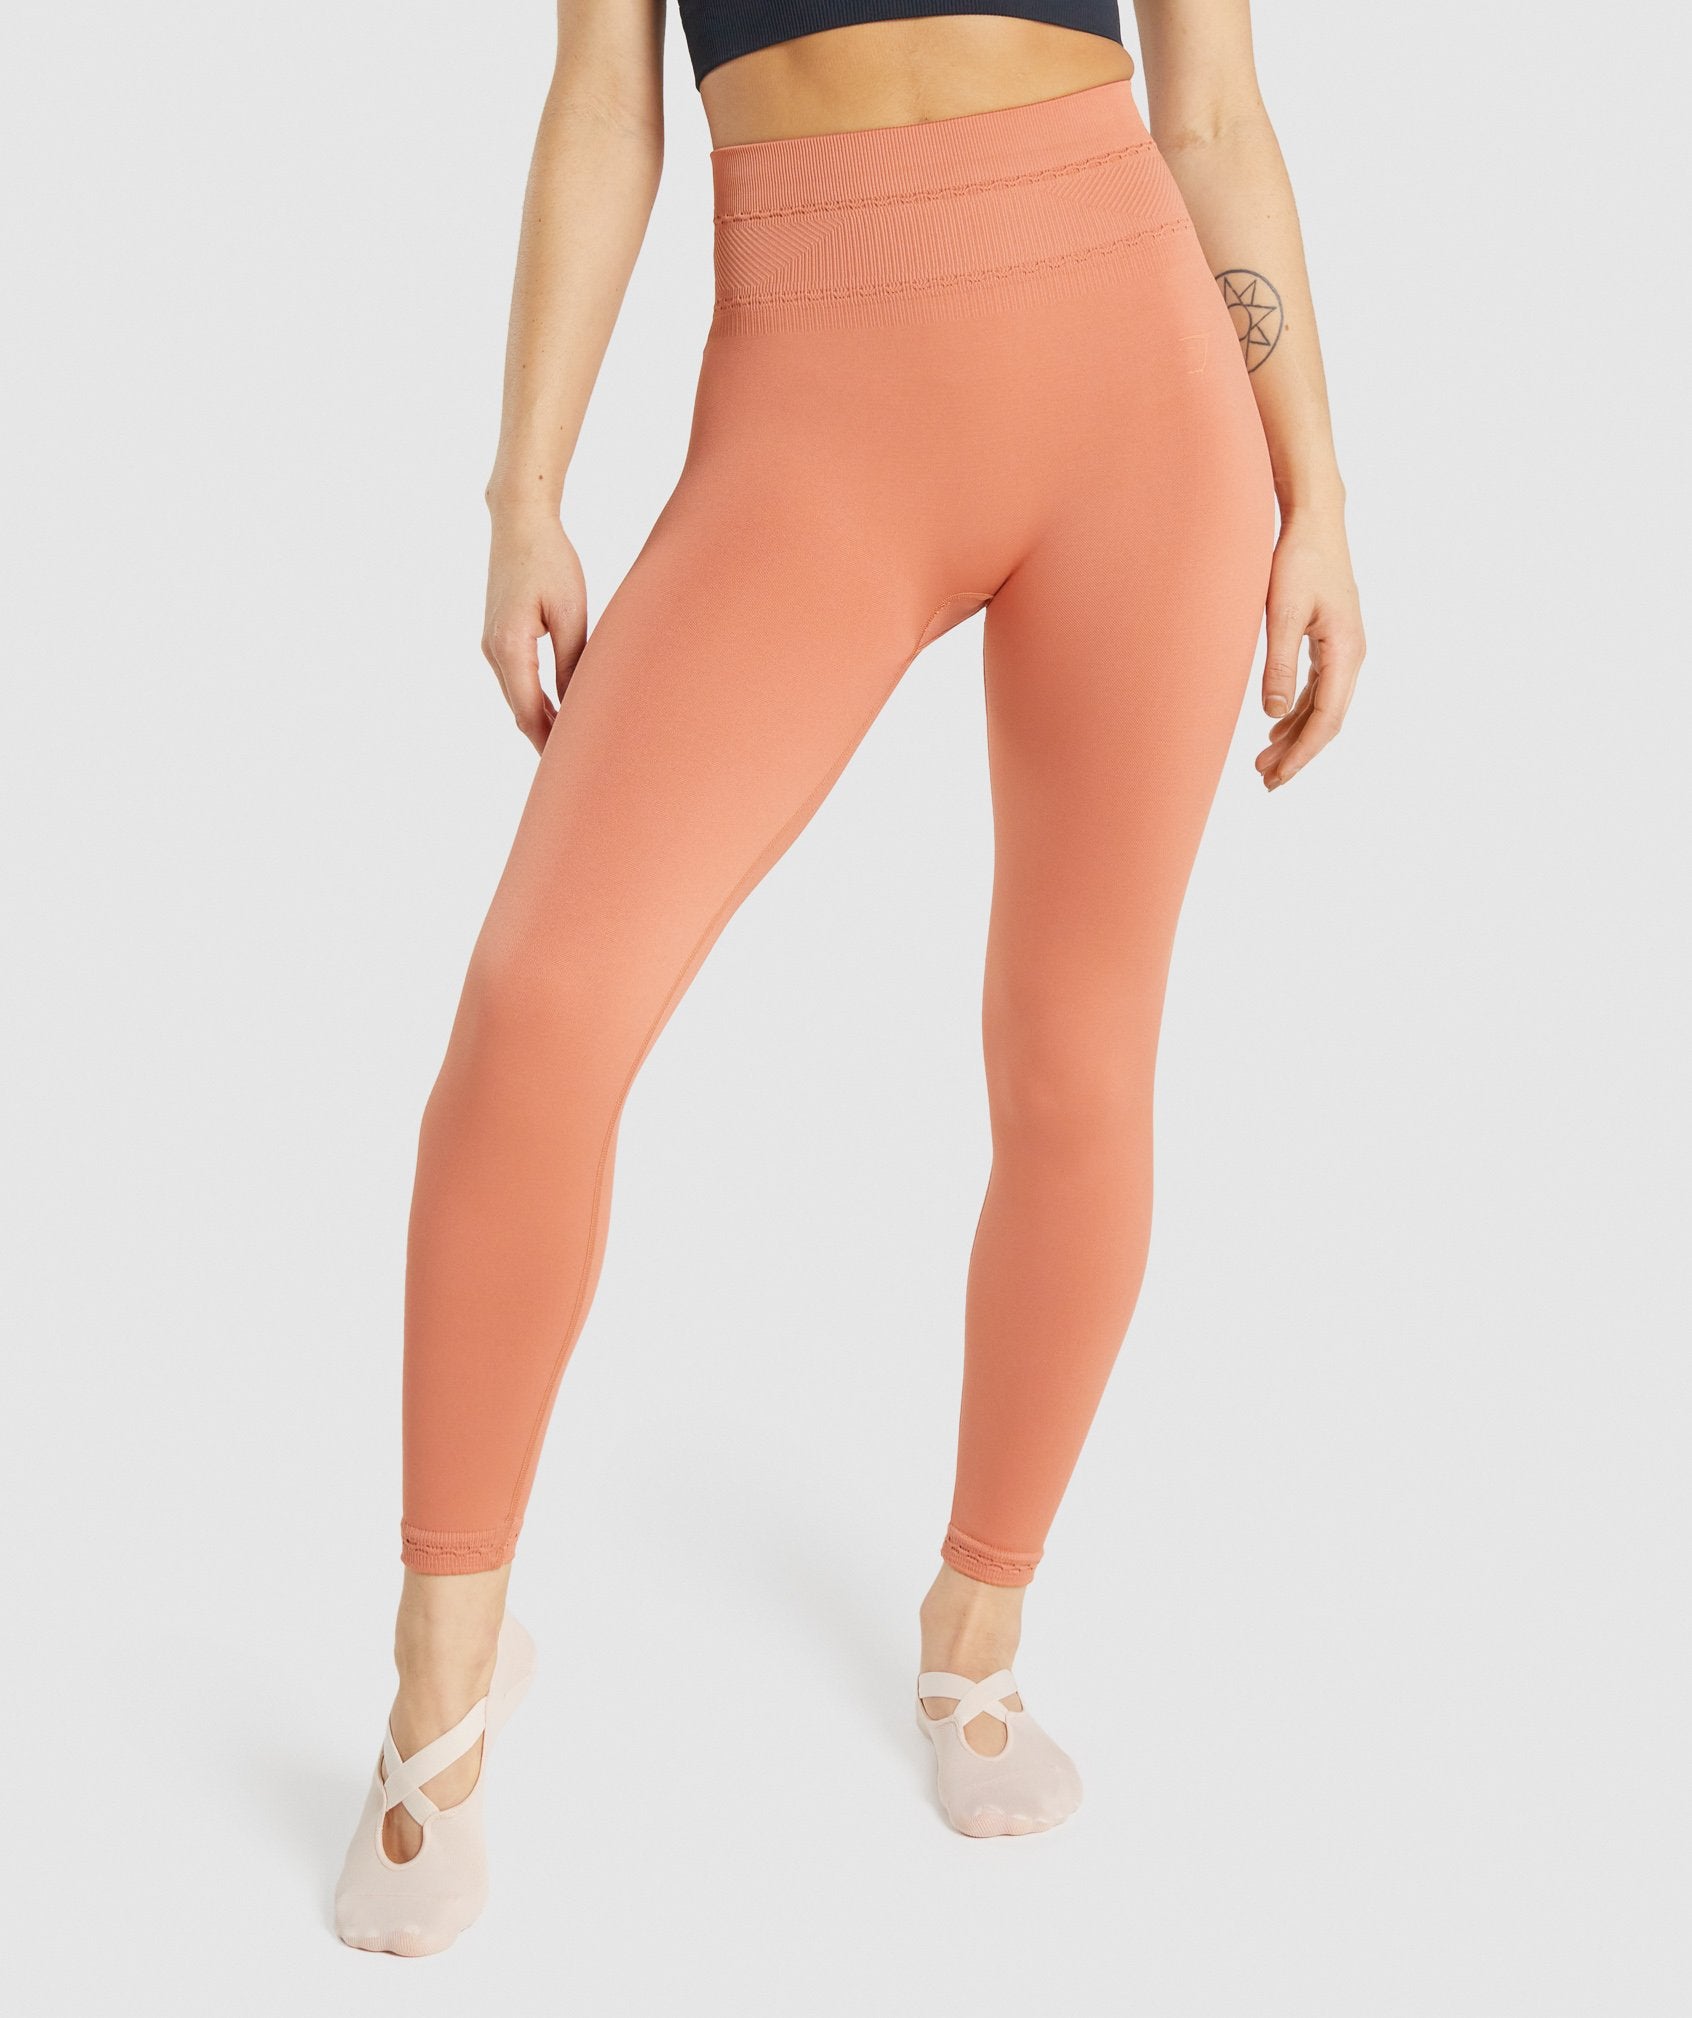 Gymshark Flawless Knit Legging Burnt orange Size XS - $27 (50% Off Retail)  - From naarin